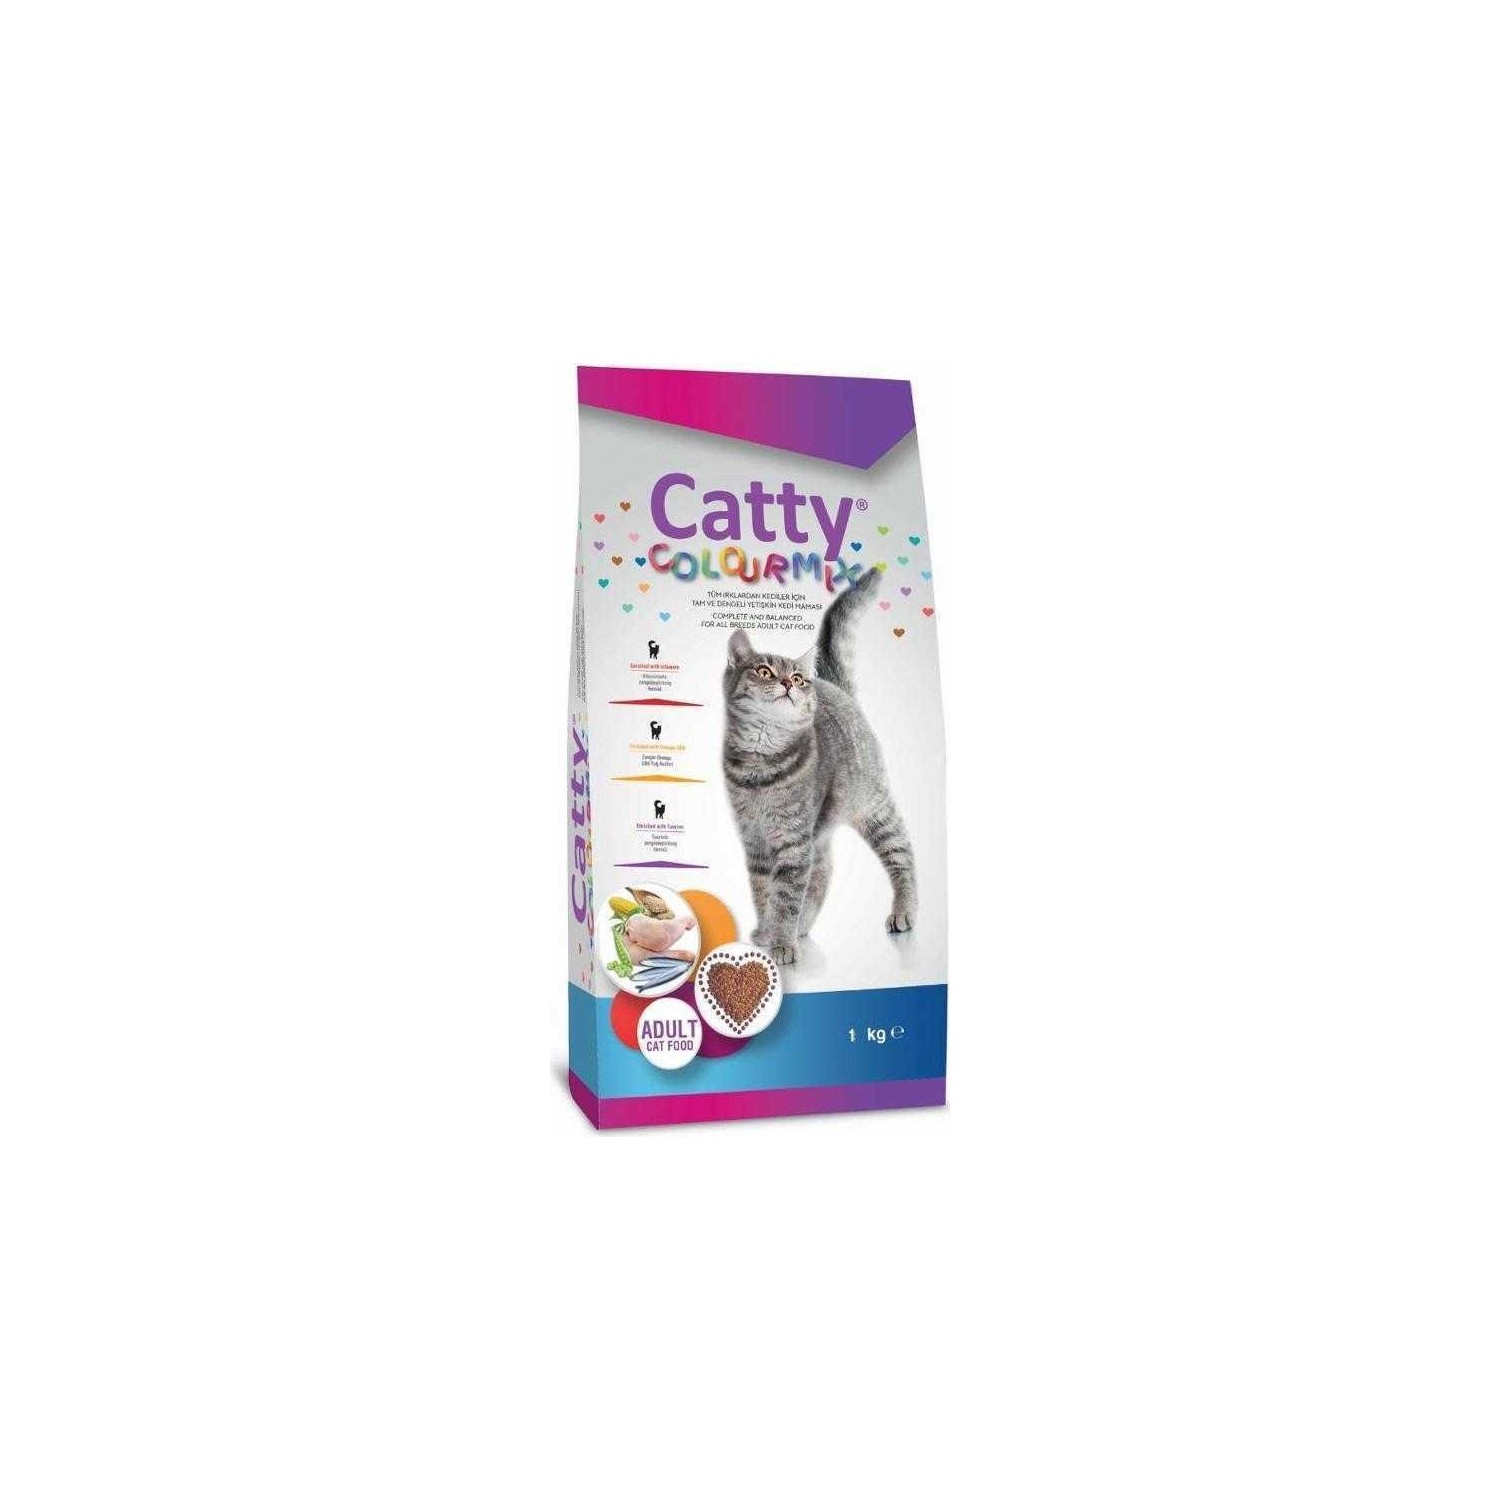 Catty Colourmix Renkli Taneli Yetiskin Kedi Mamasi 1 Kg Fiyati